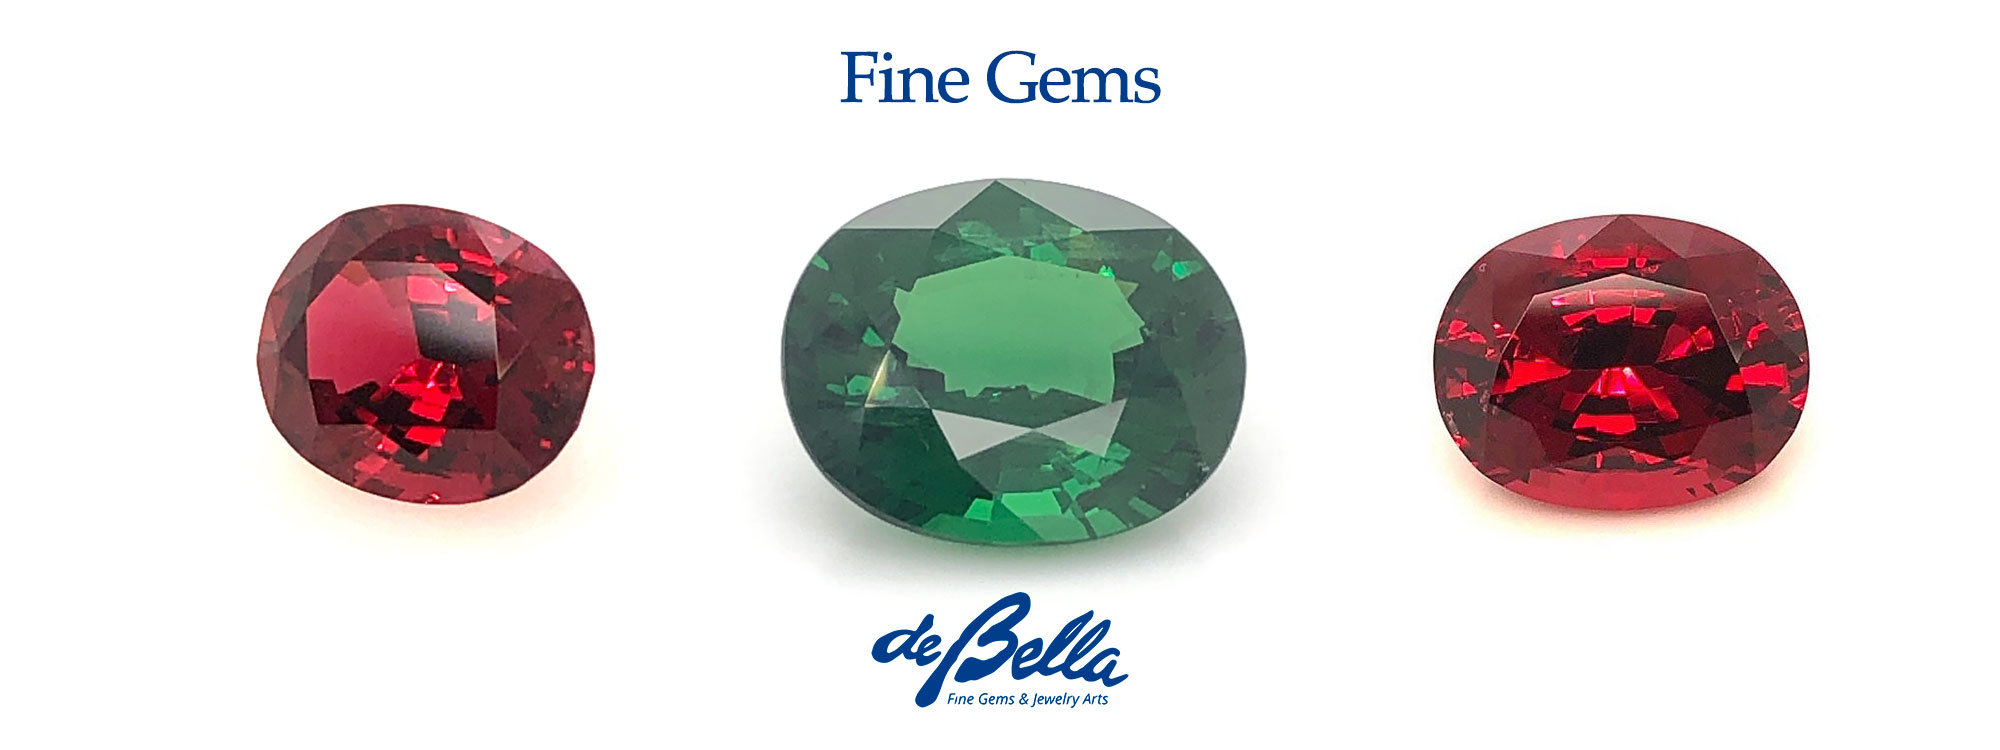 deBella Fine Gems